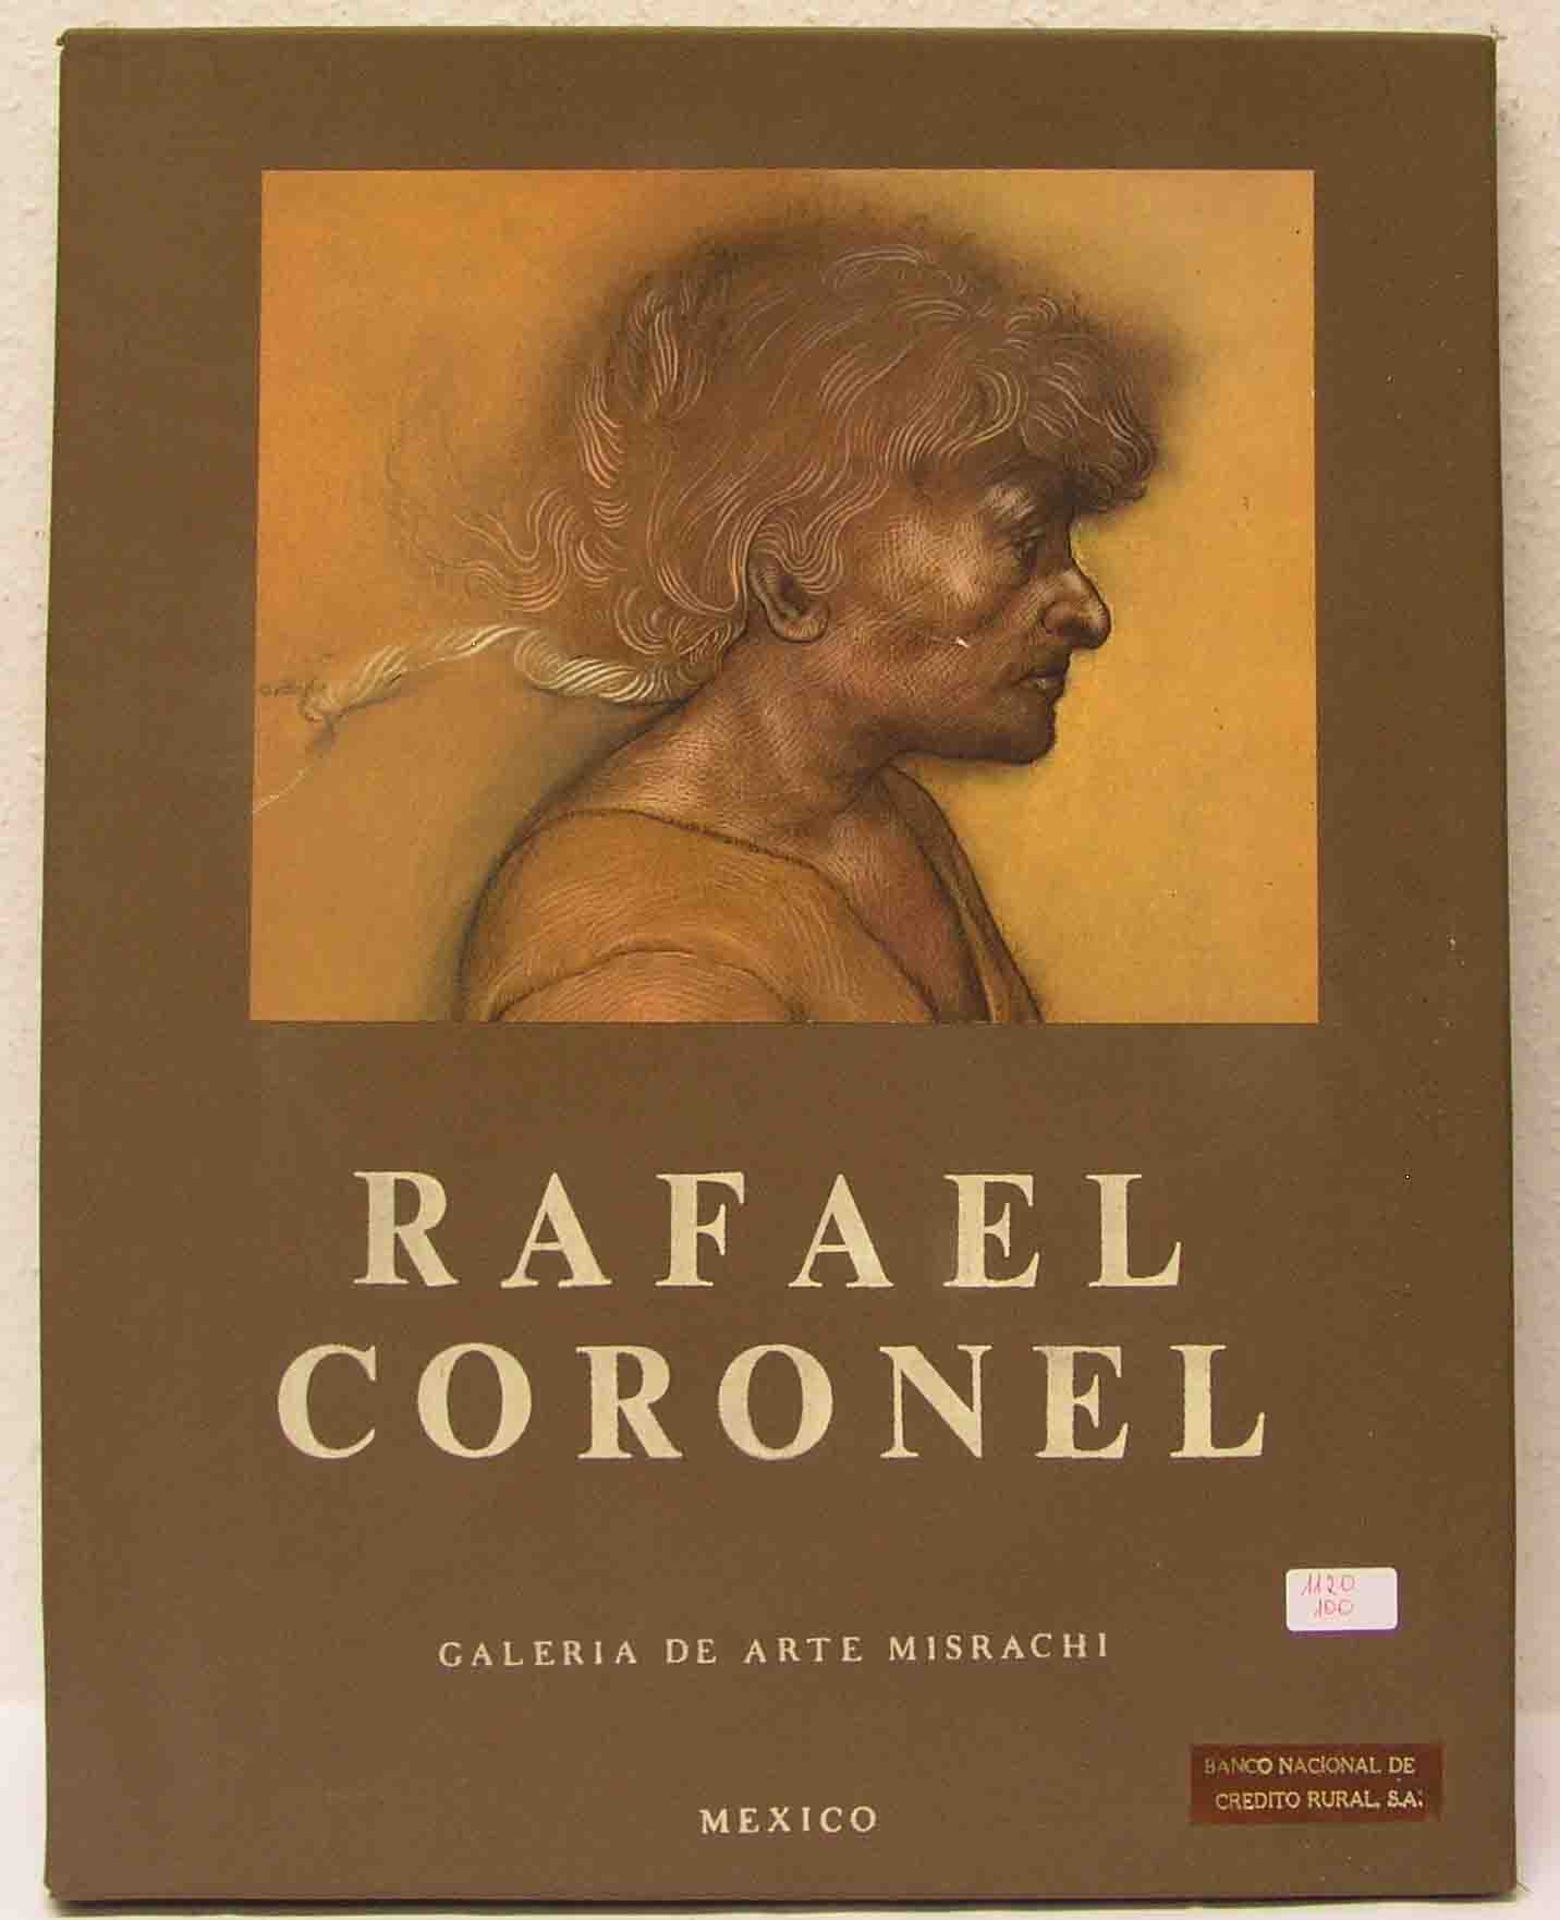 Rafael Coronel, Galeria de Arte Misrachi, Mexico: Mappe mit 20 Blatt.